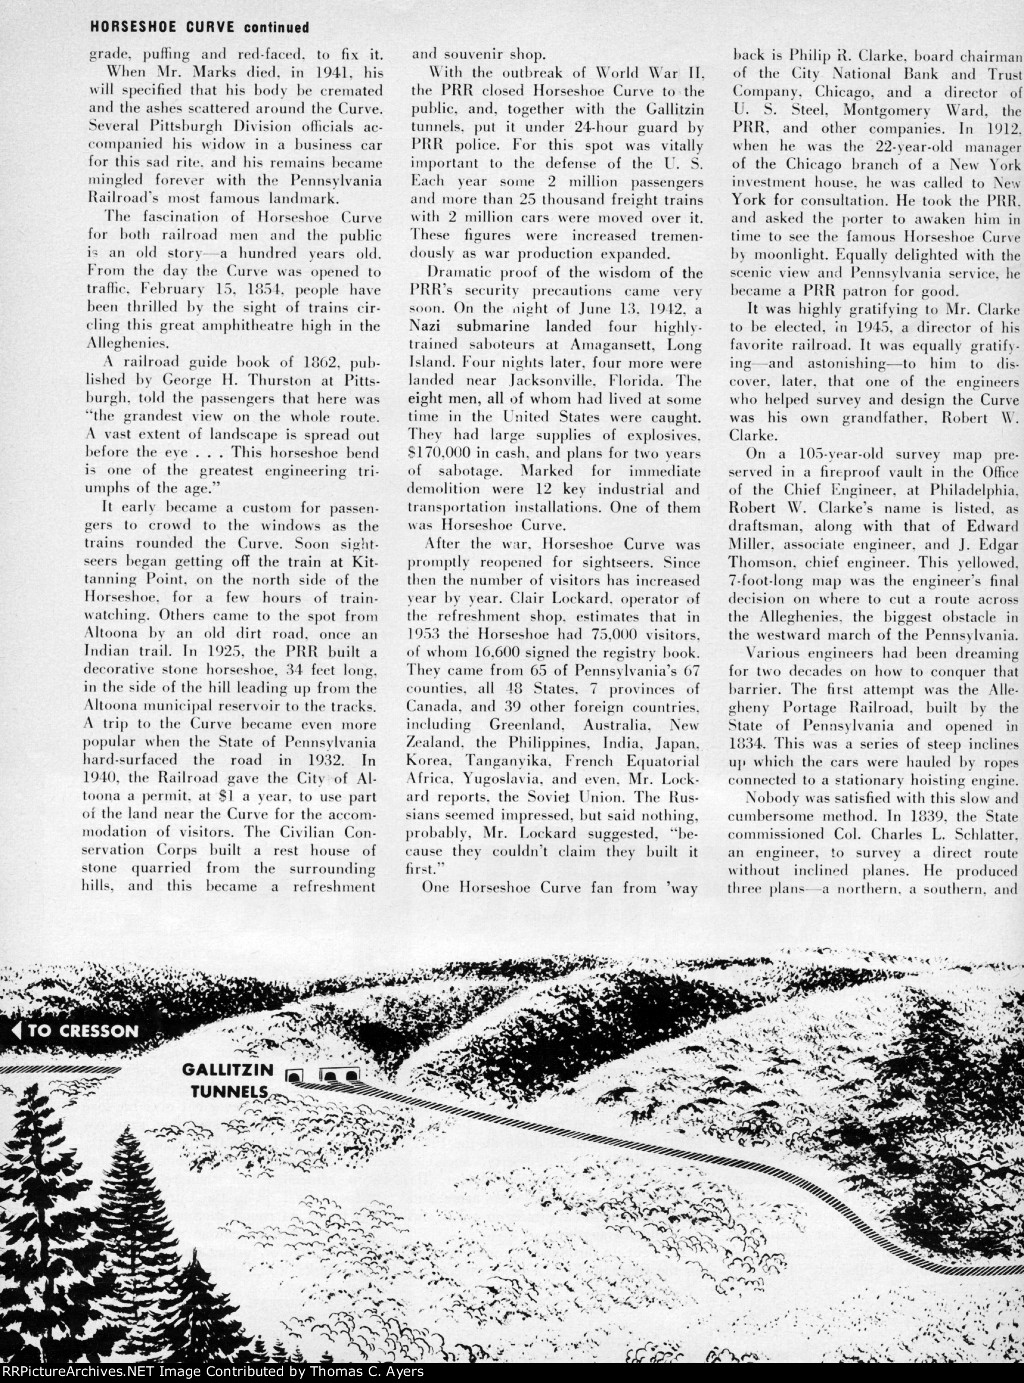 "Horseshoe Curve," Page 2, 1954